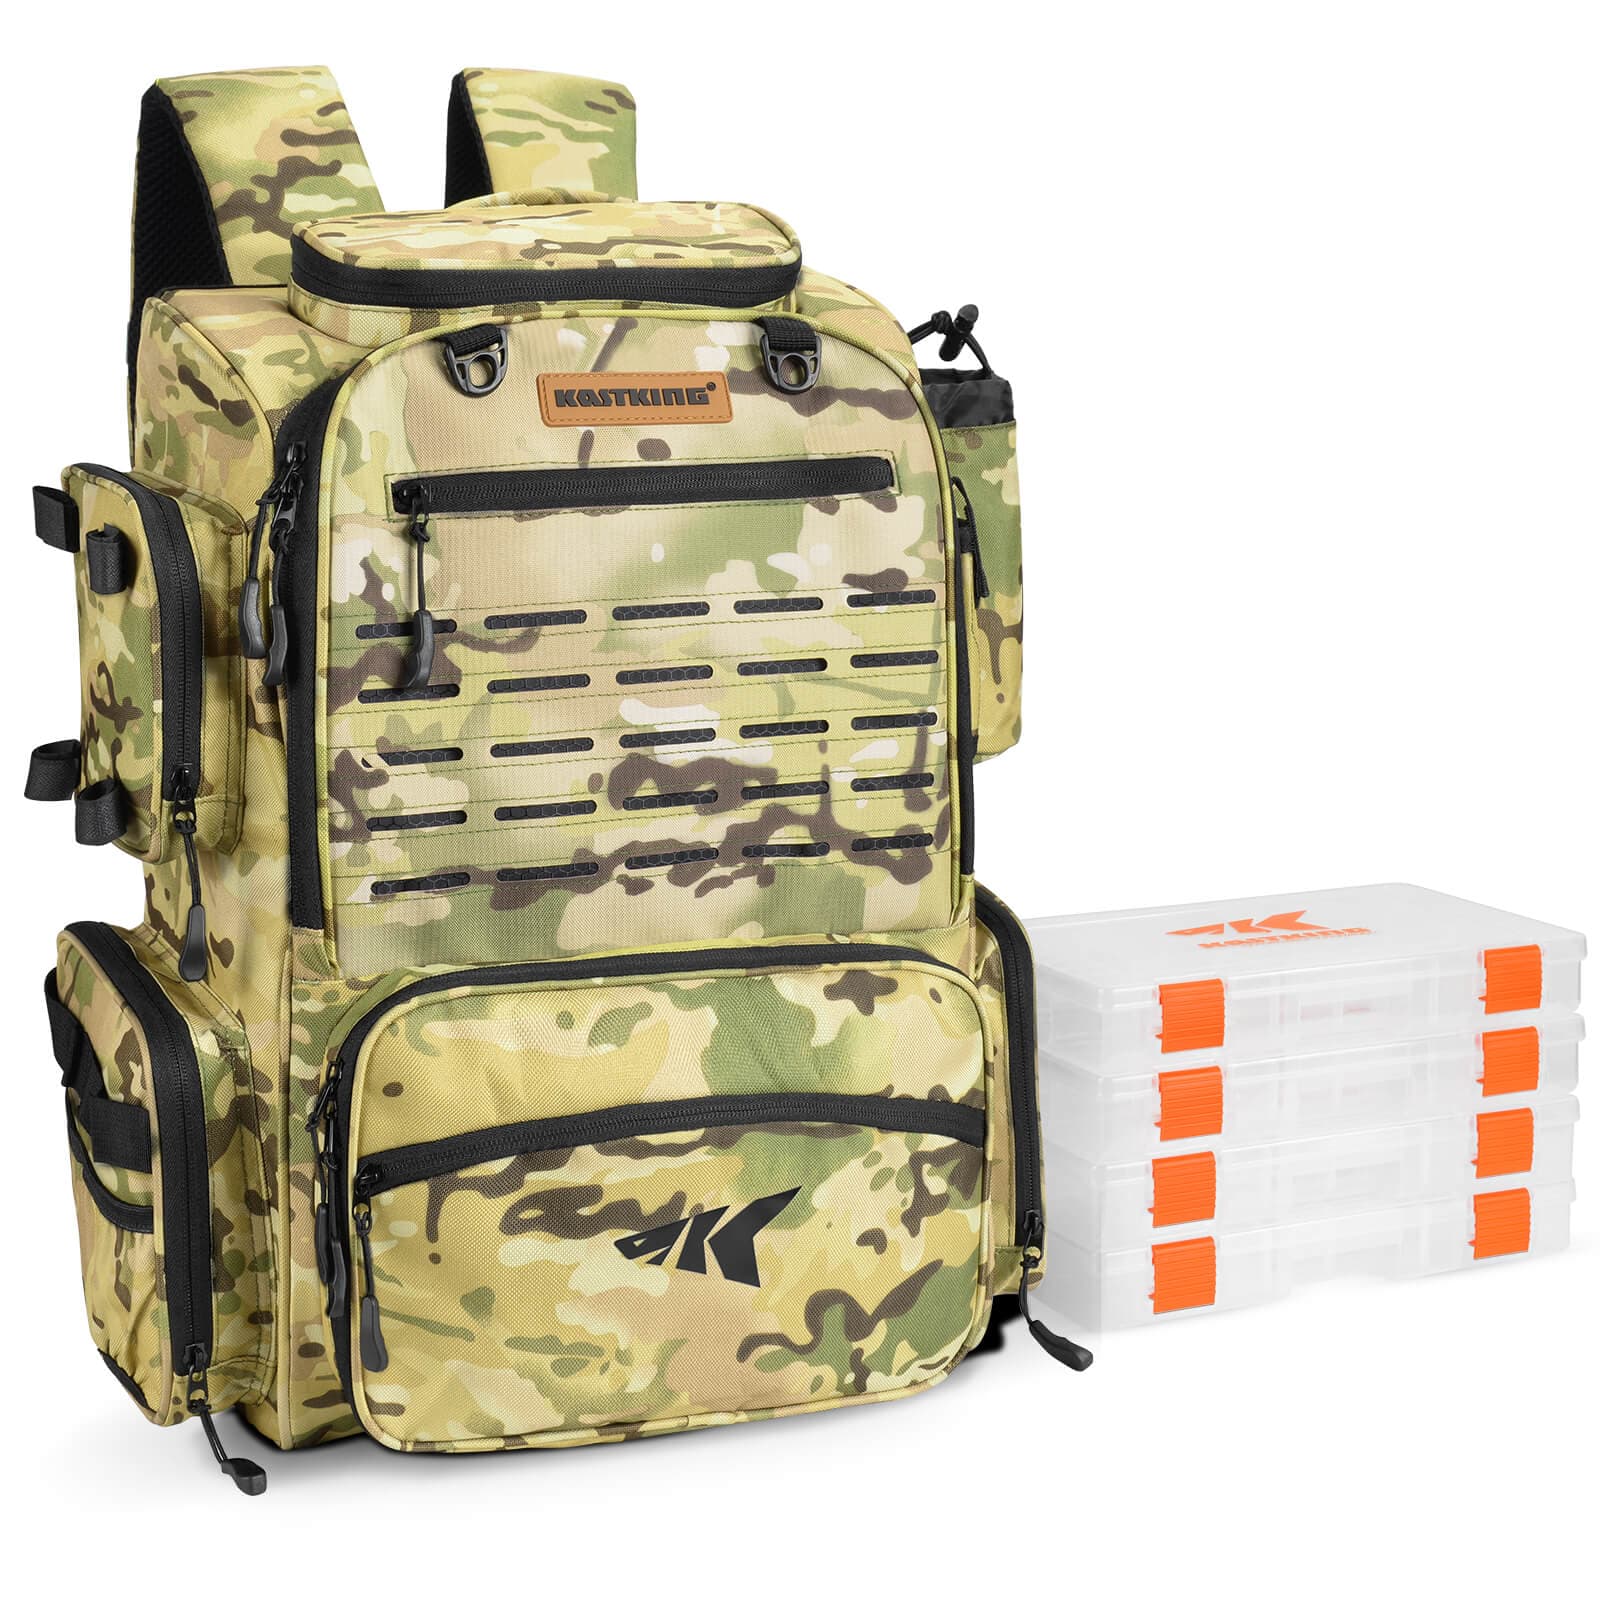 KastKing Bait Boss Fishing Tackle Backpack - Yellow Camouflage